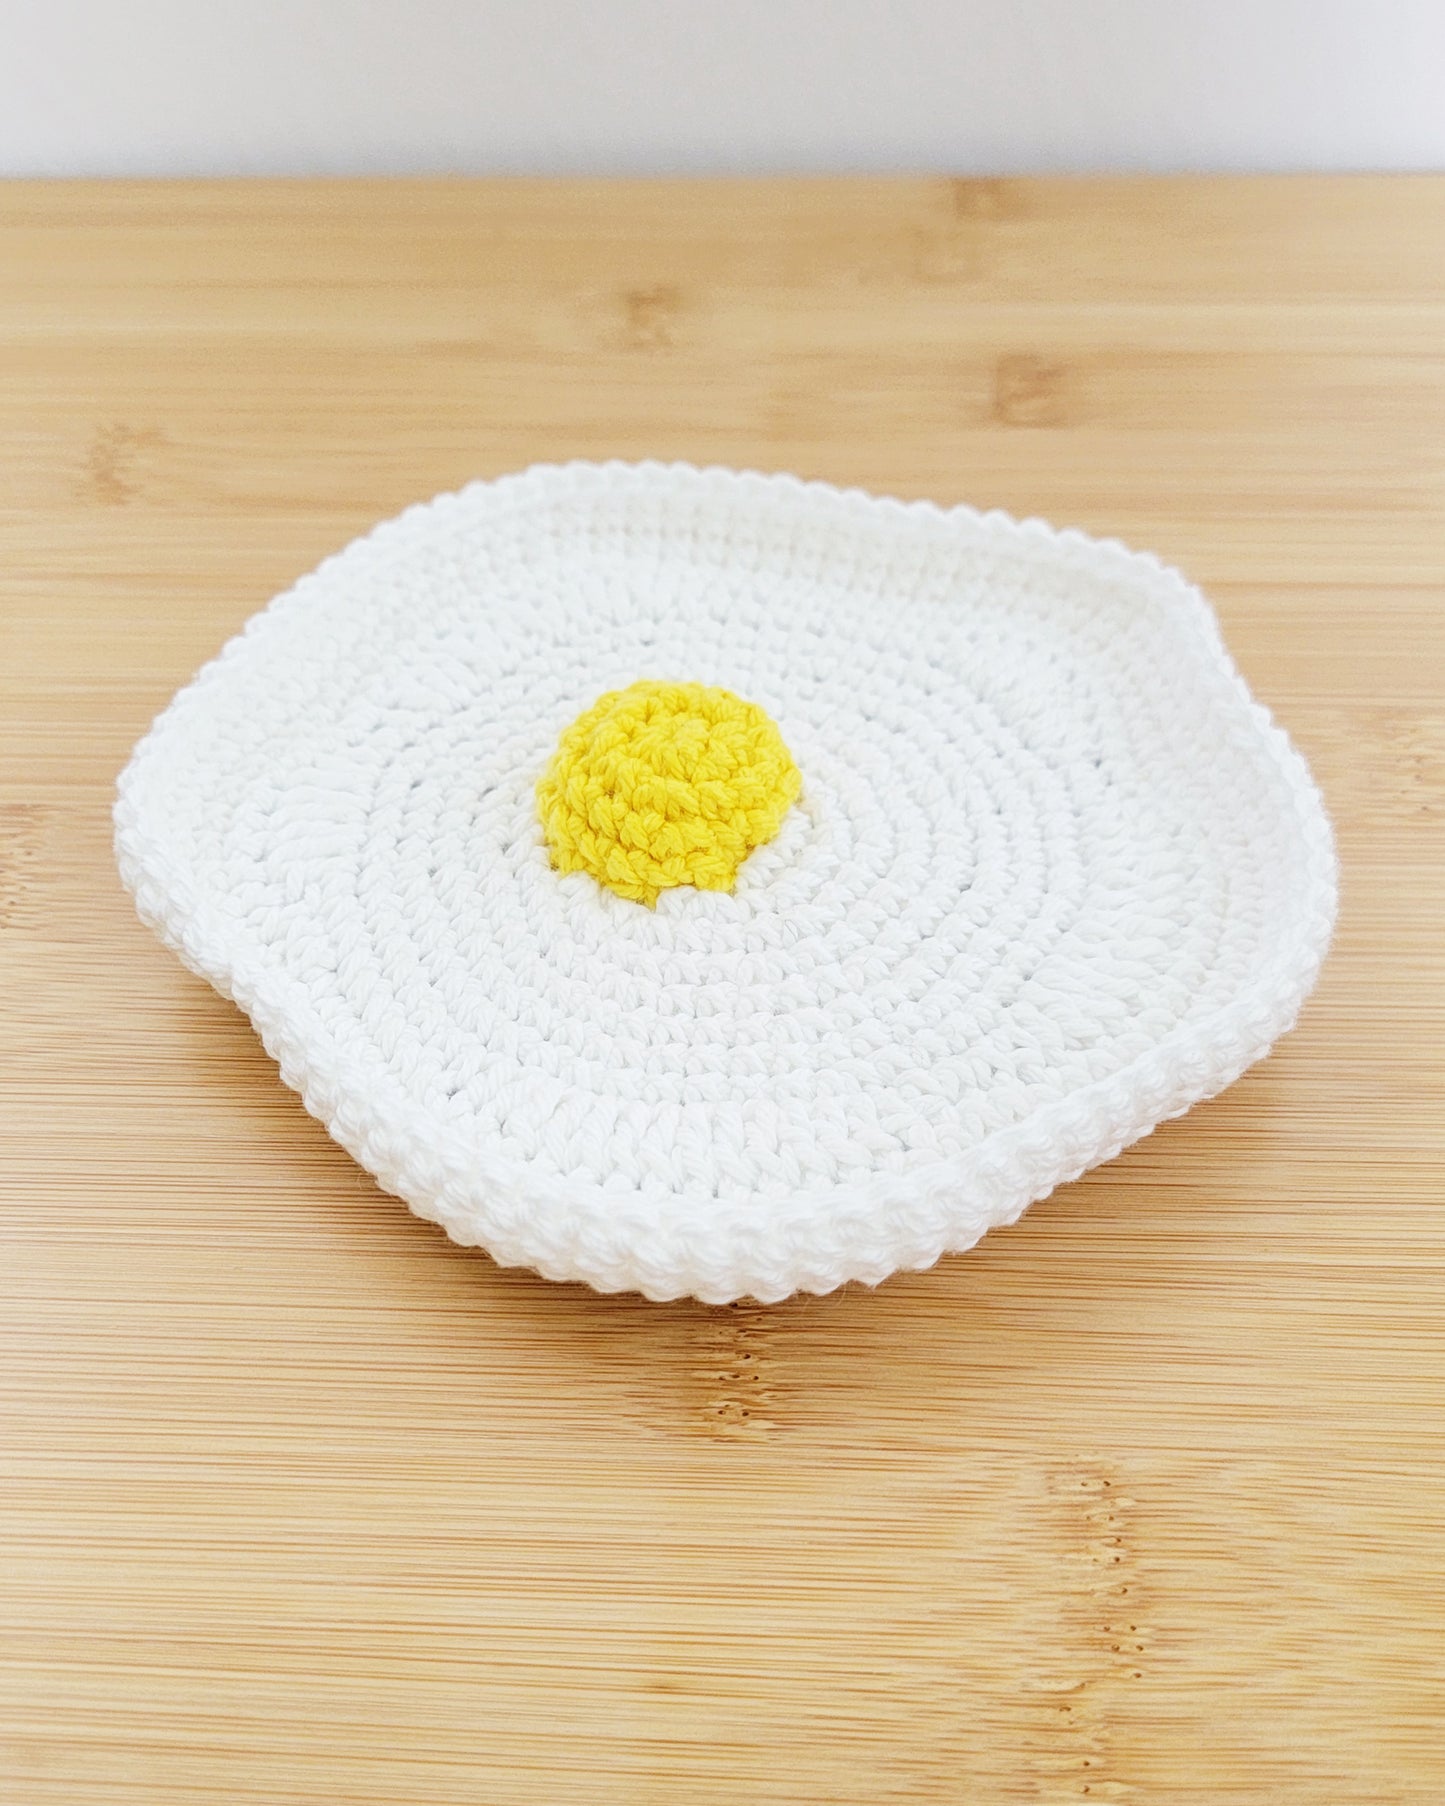 Crochet Pattern: Egg Trinket Dish